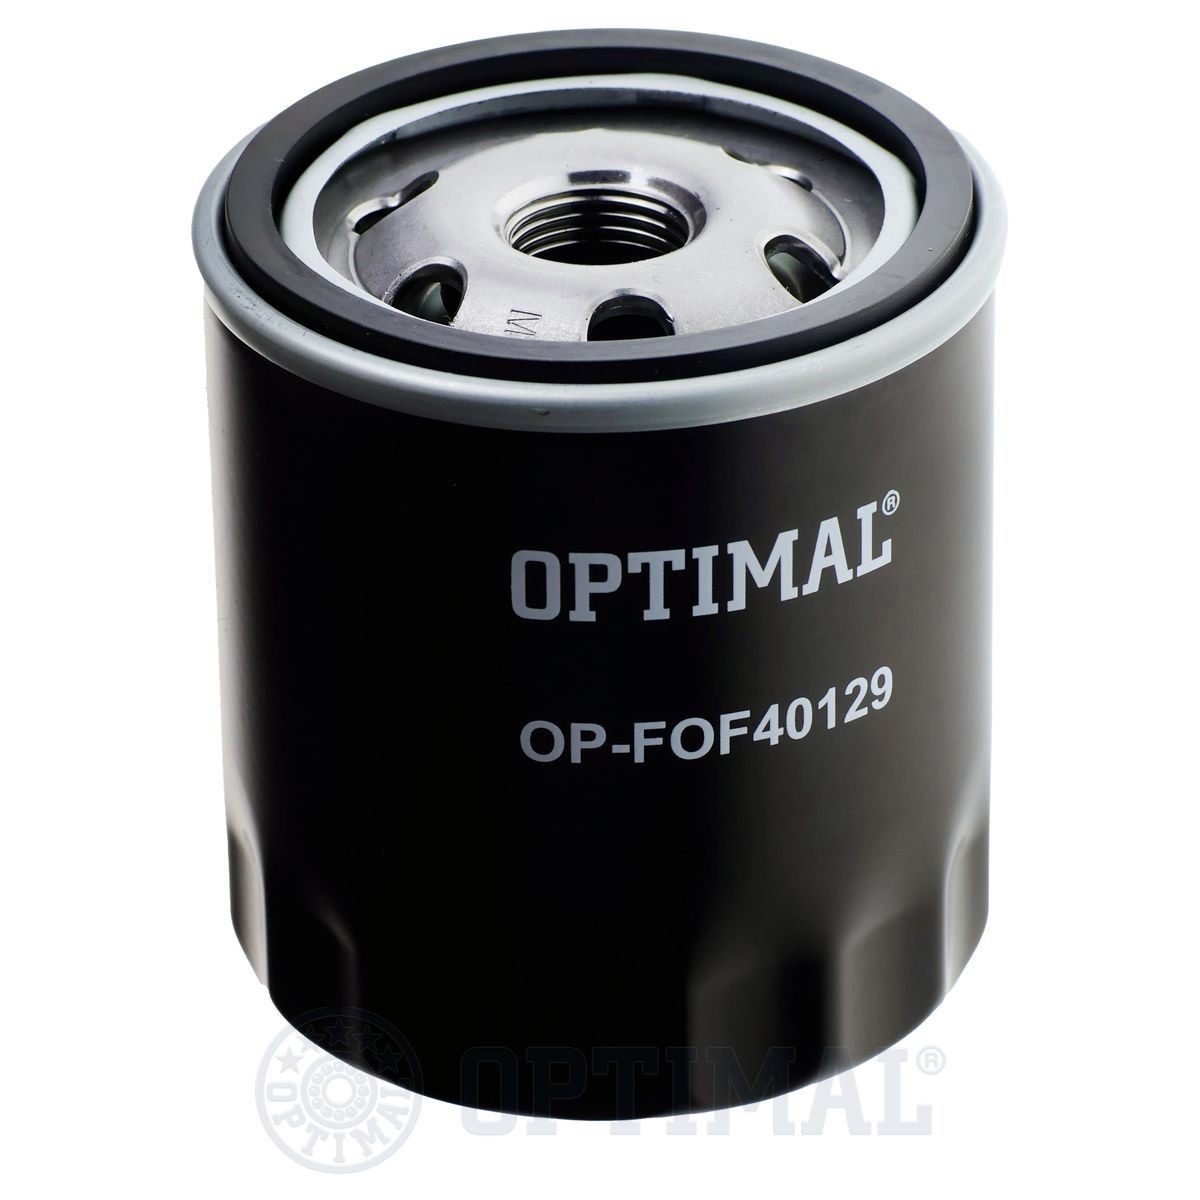 OPTIMAL OP-FOF40129 Oil filter 6439 929